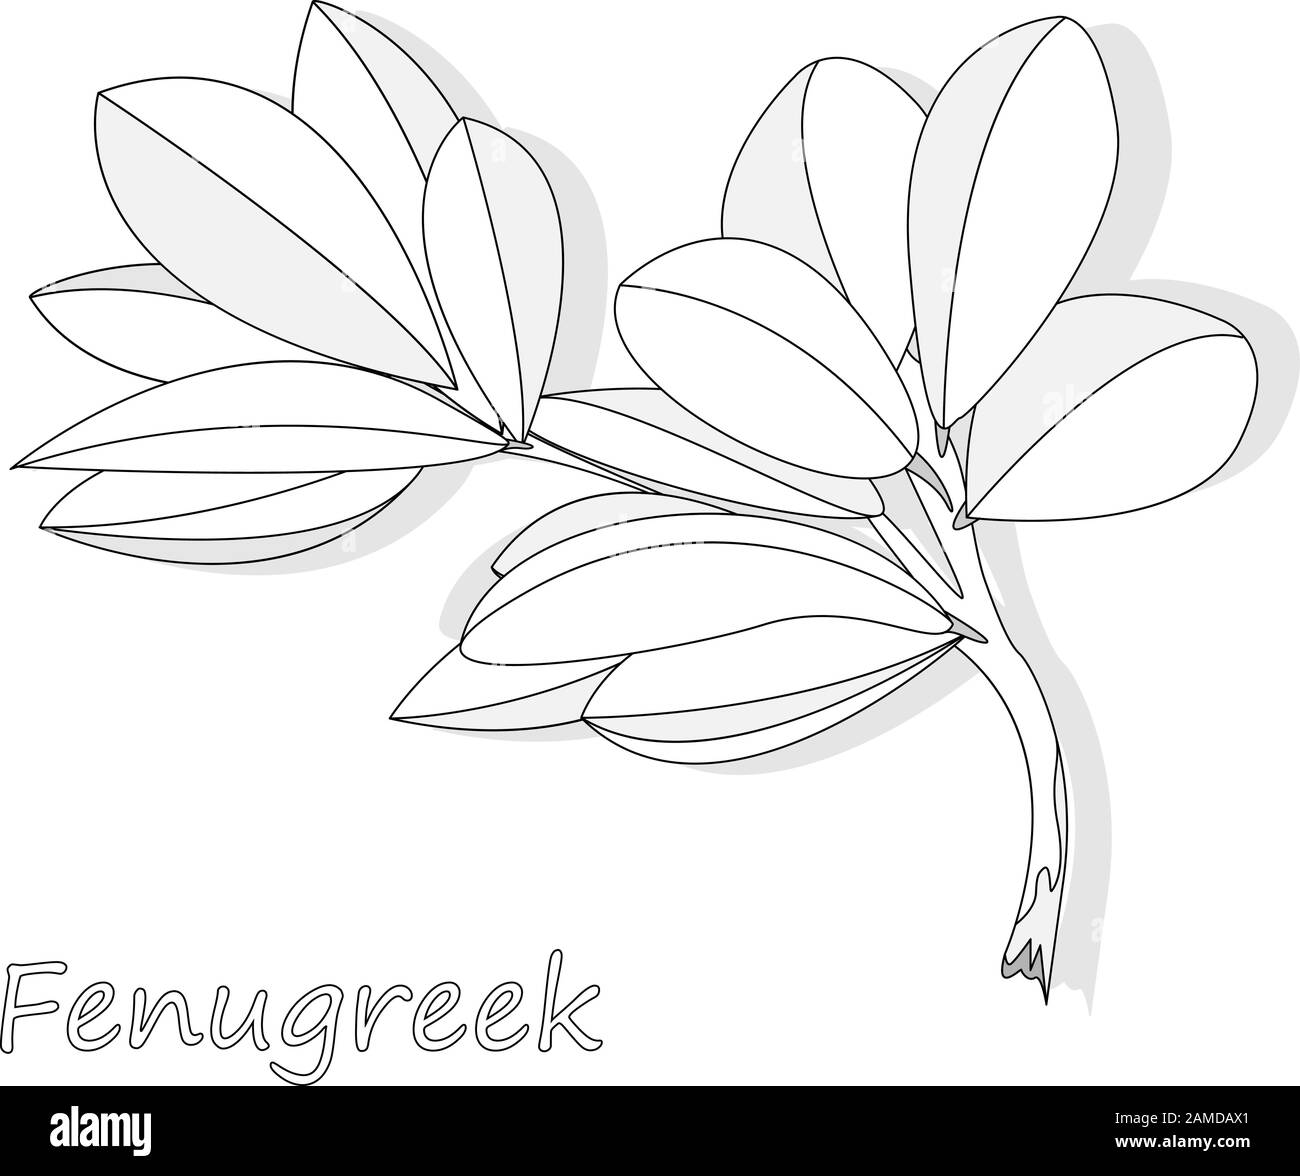 Methi, fenugreek leaves vector illustration on white background. isolated image. Stock Vector